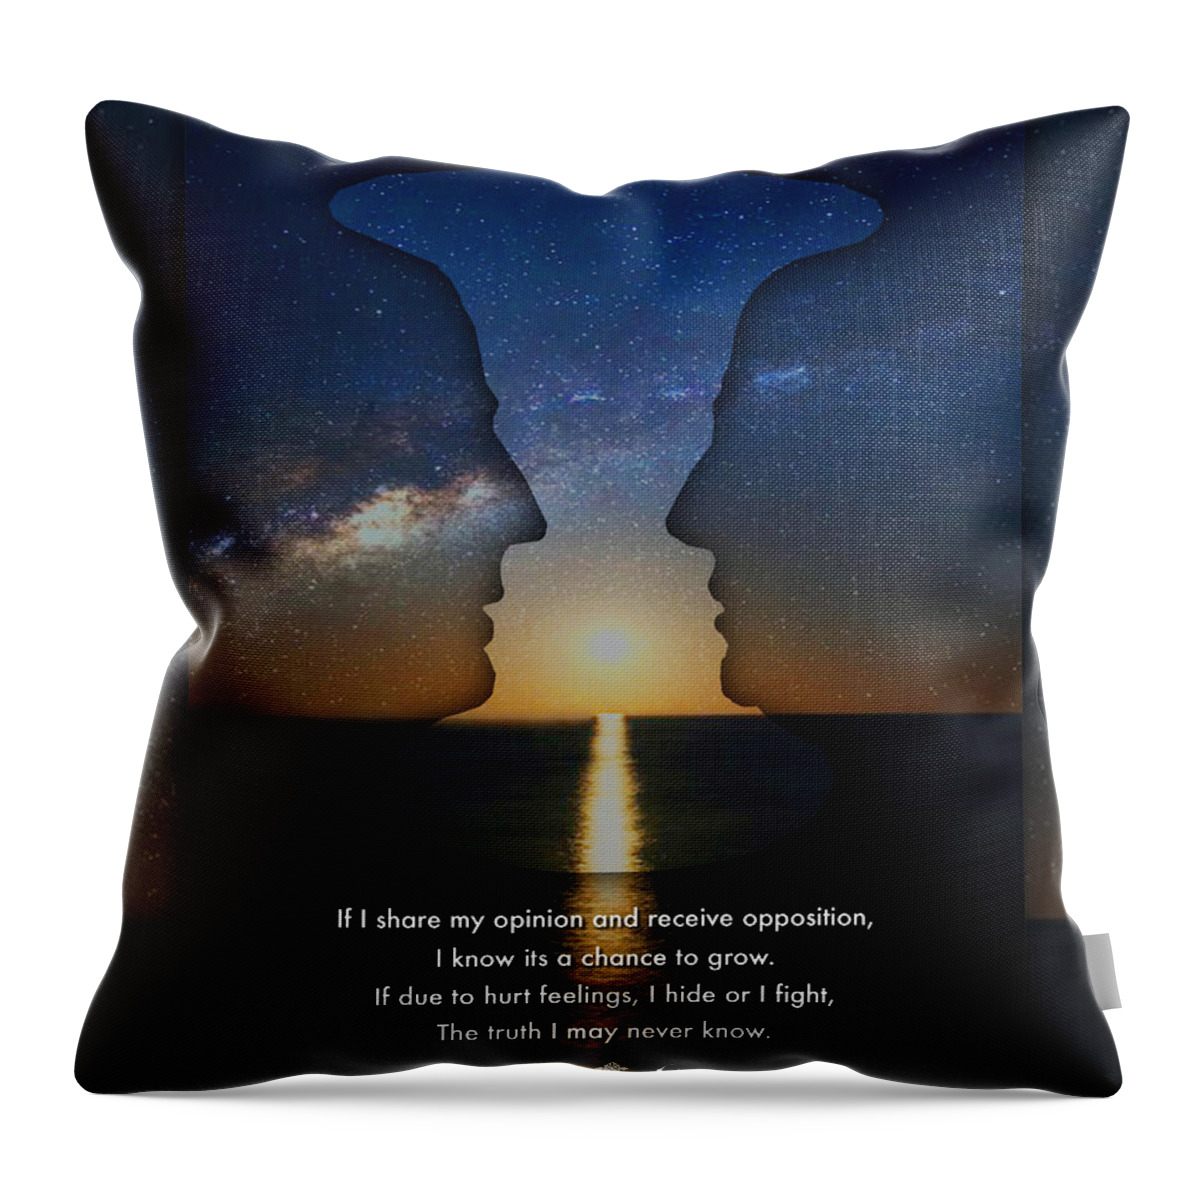 Sunset Throw Pillow featuring the mixed media Kaypacha mantra 2.3.2015 by Richard Laeton